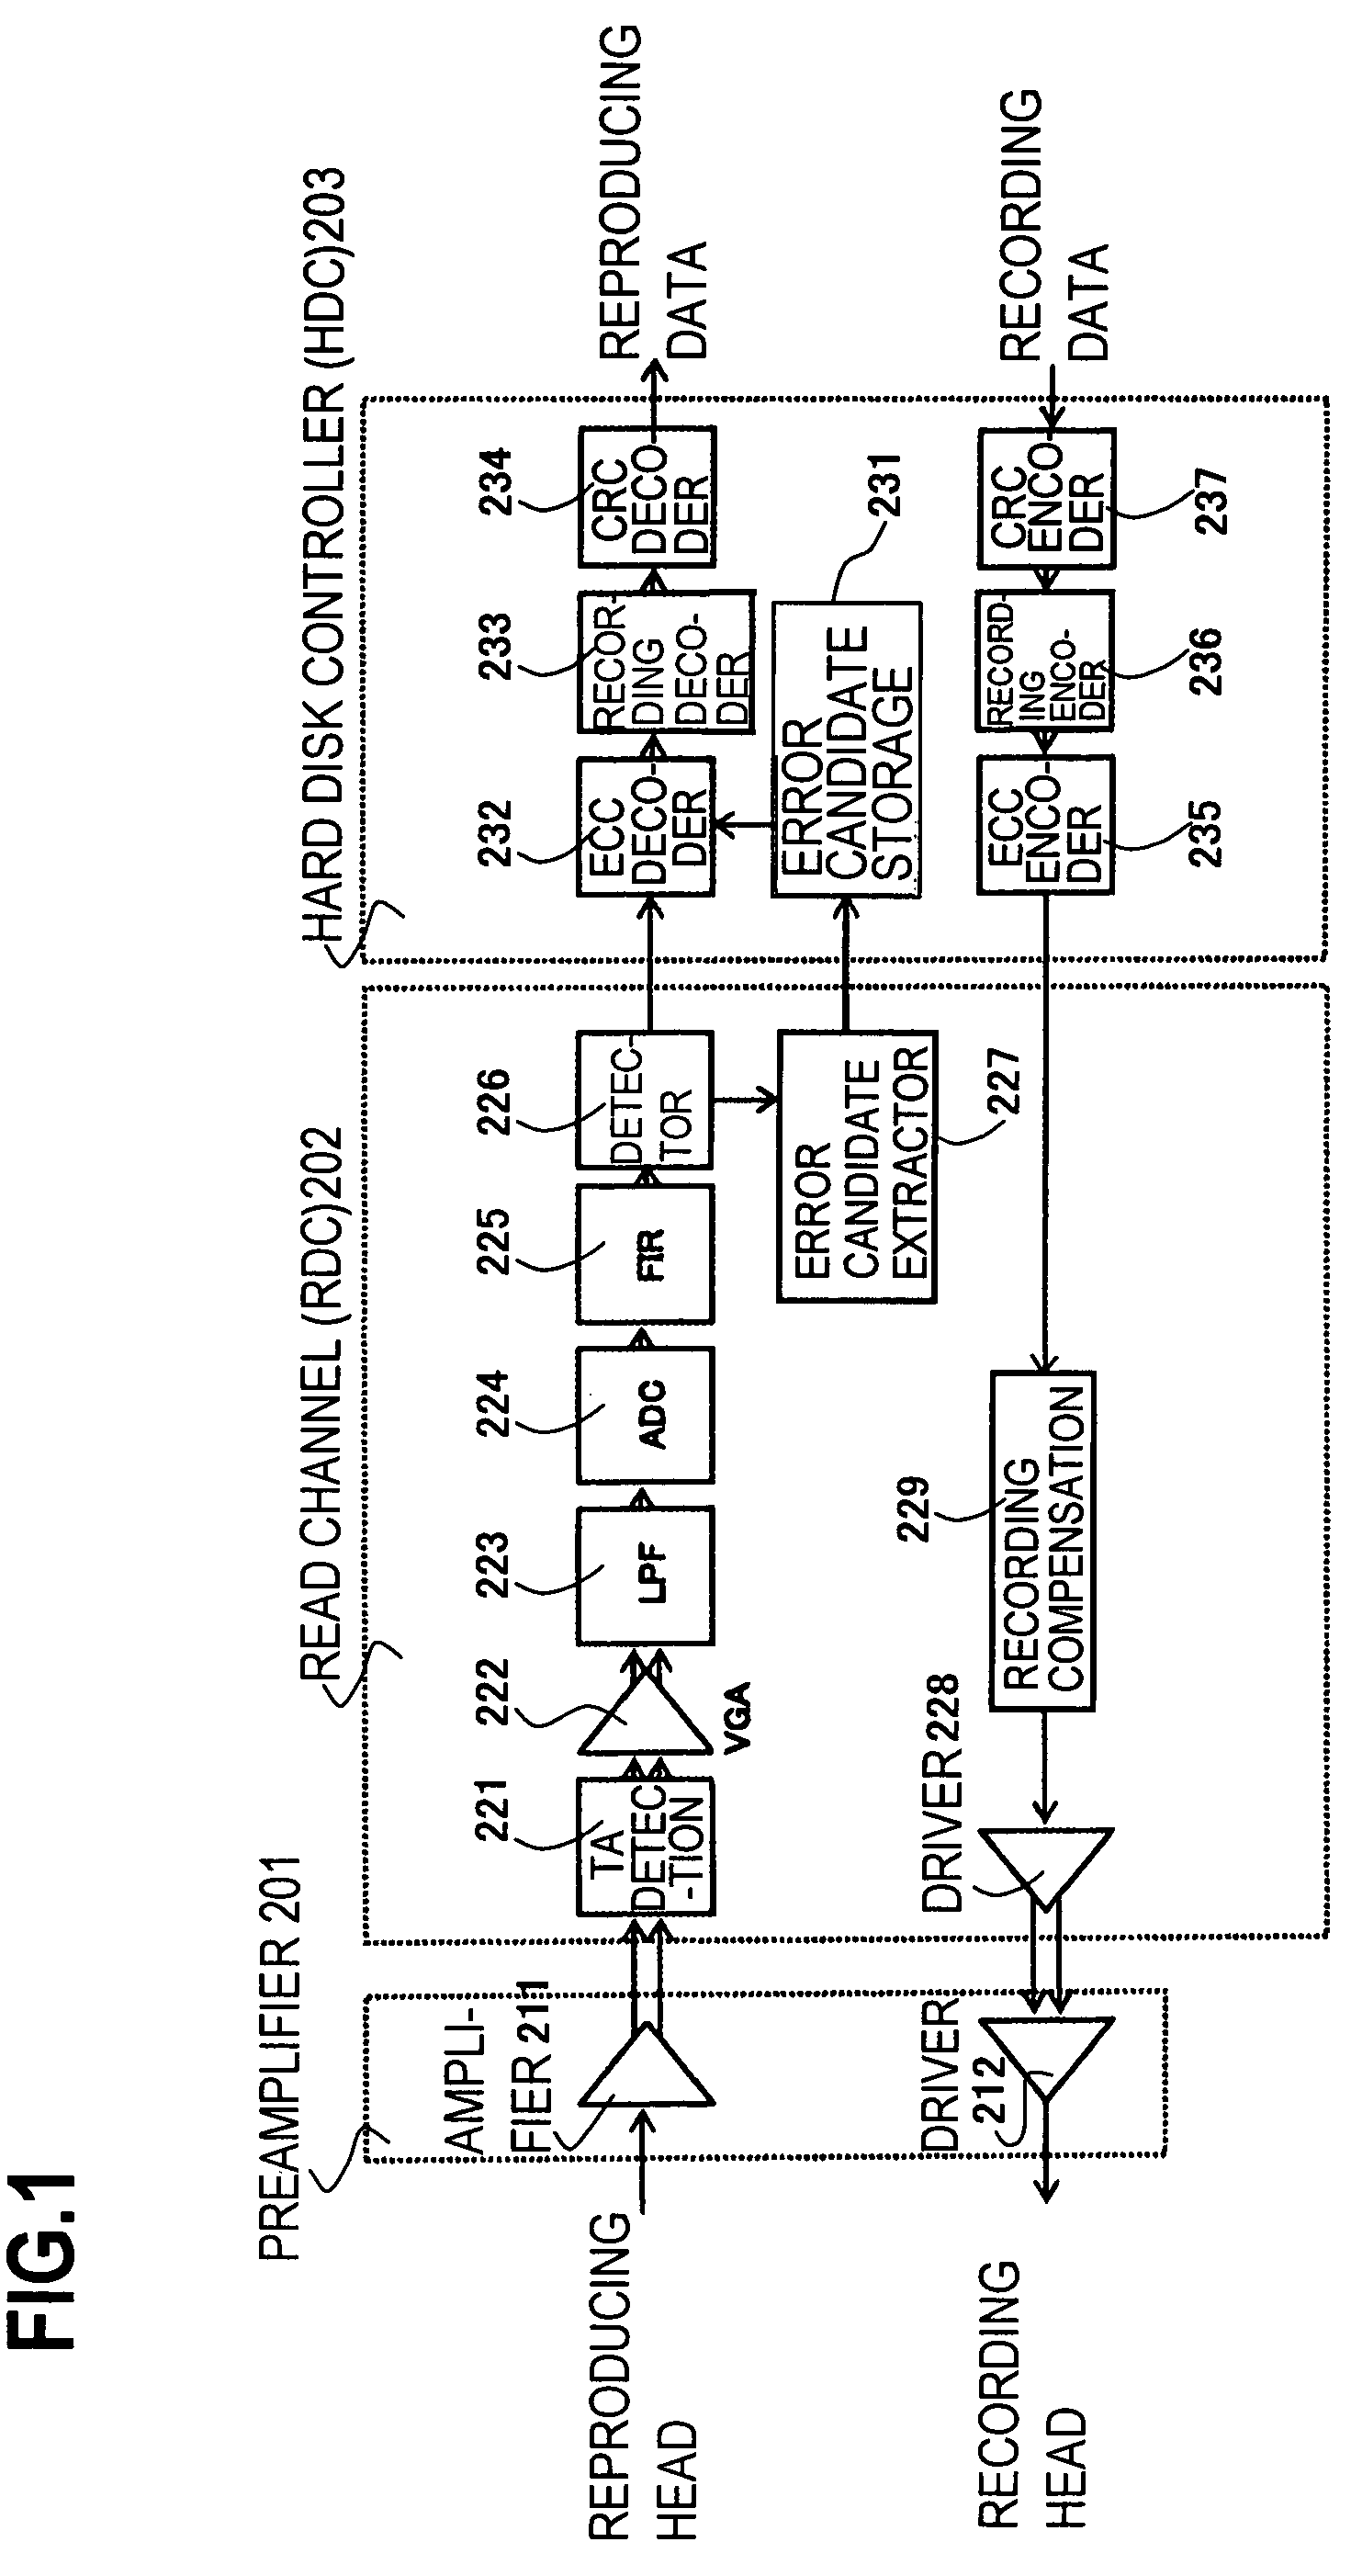 Maximum likelihood detector, error correction circuit and medium storage device